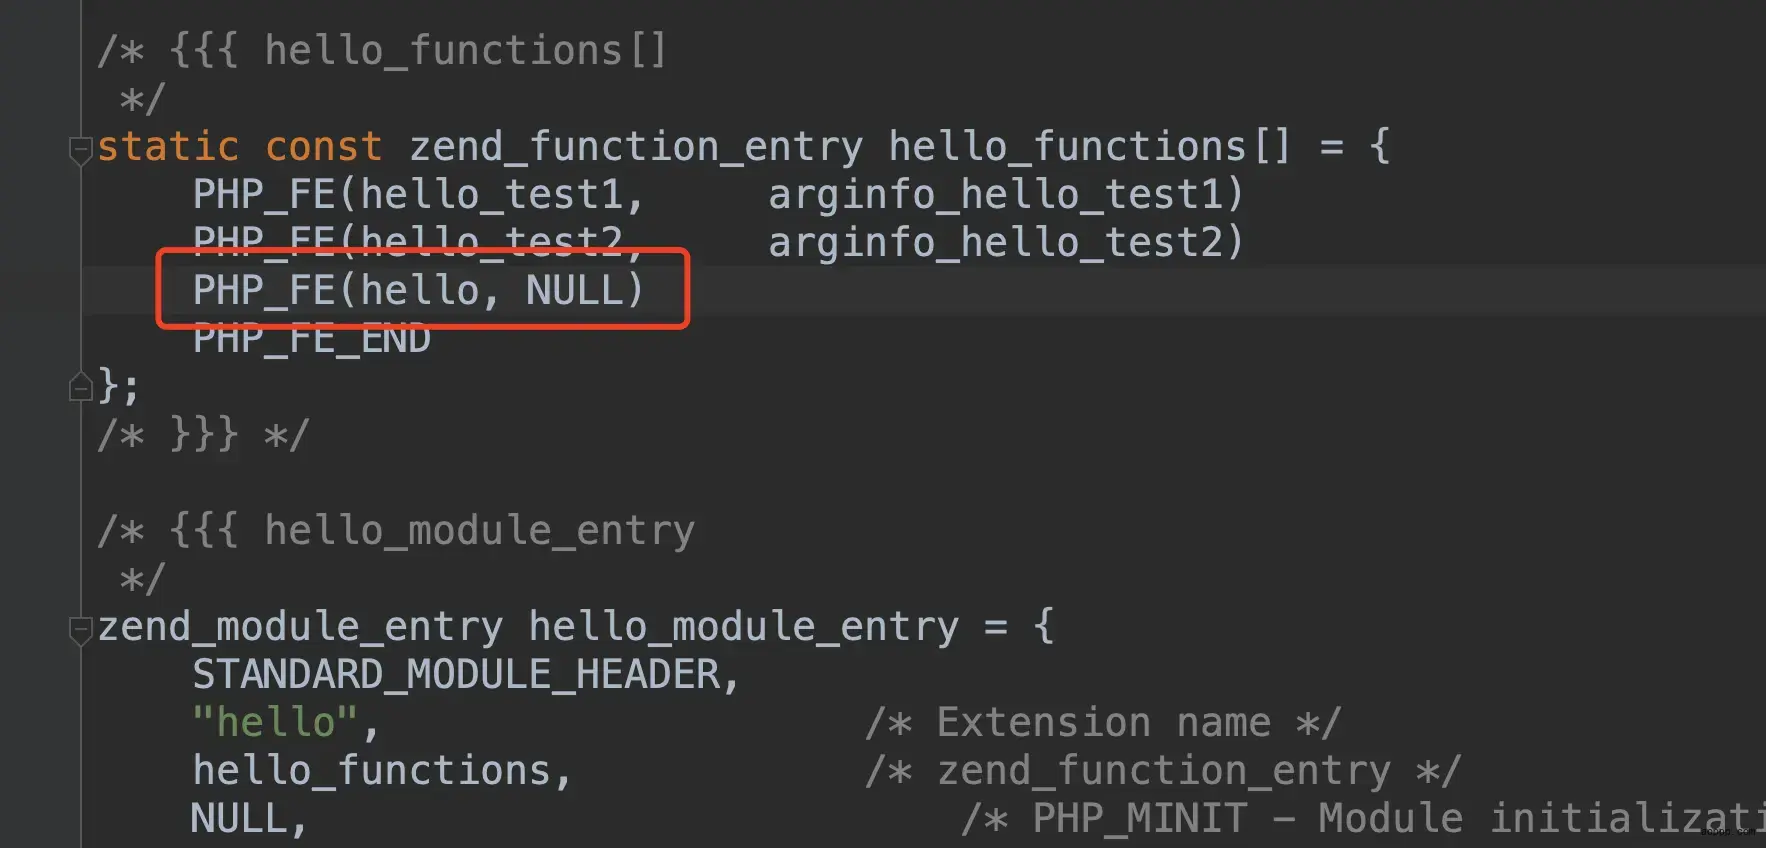 hello_functions[] array